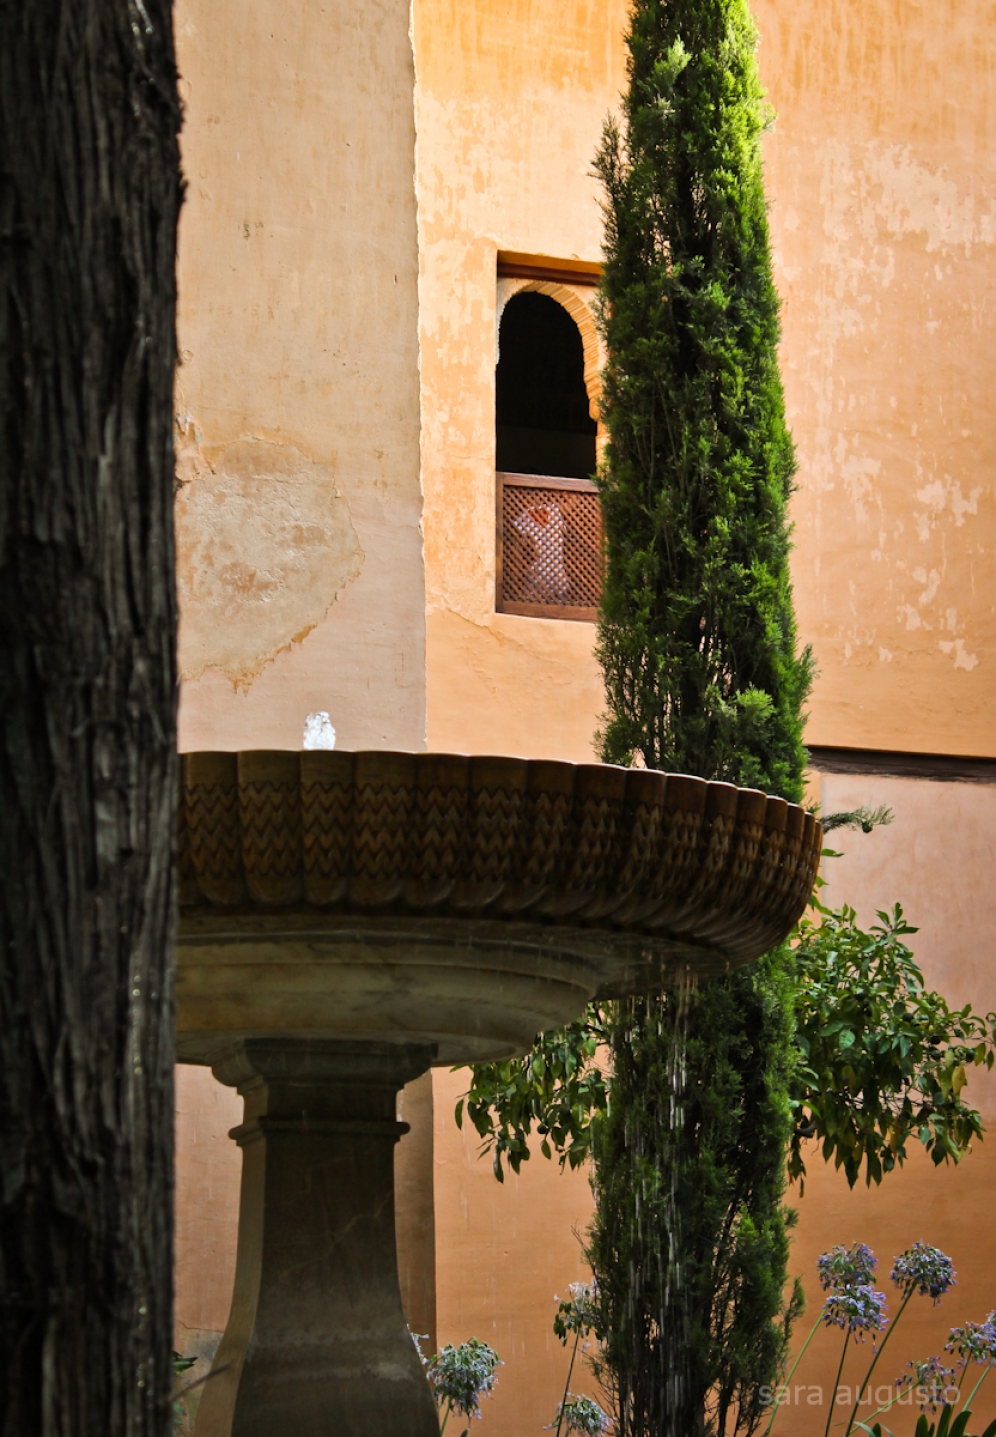 La Alhambra sara augusto 37